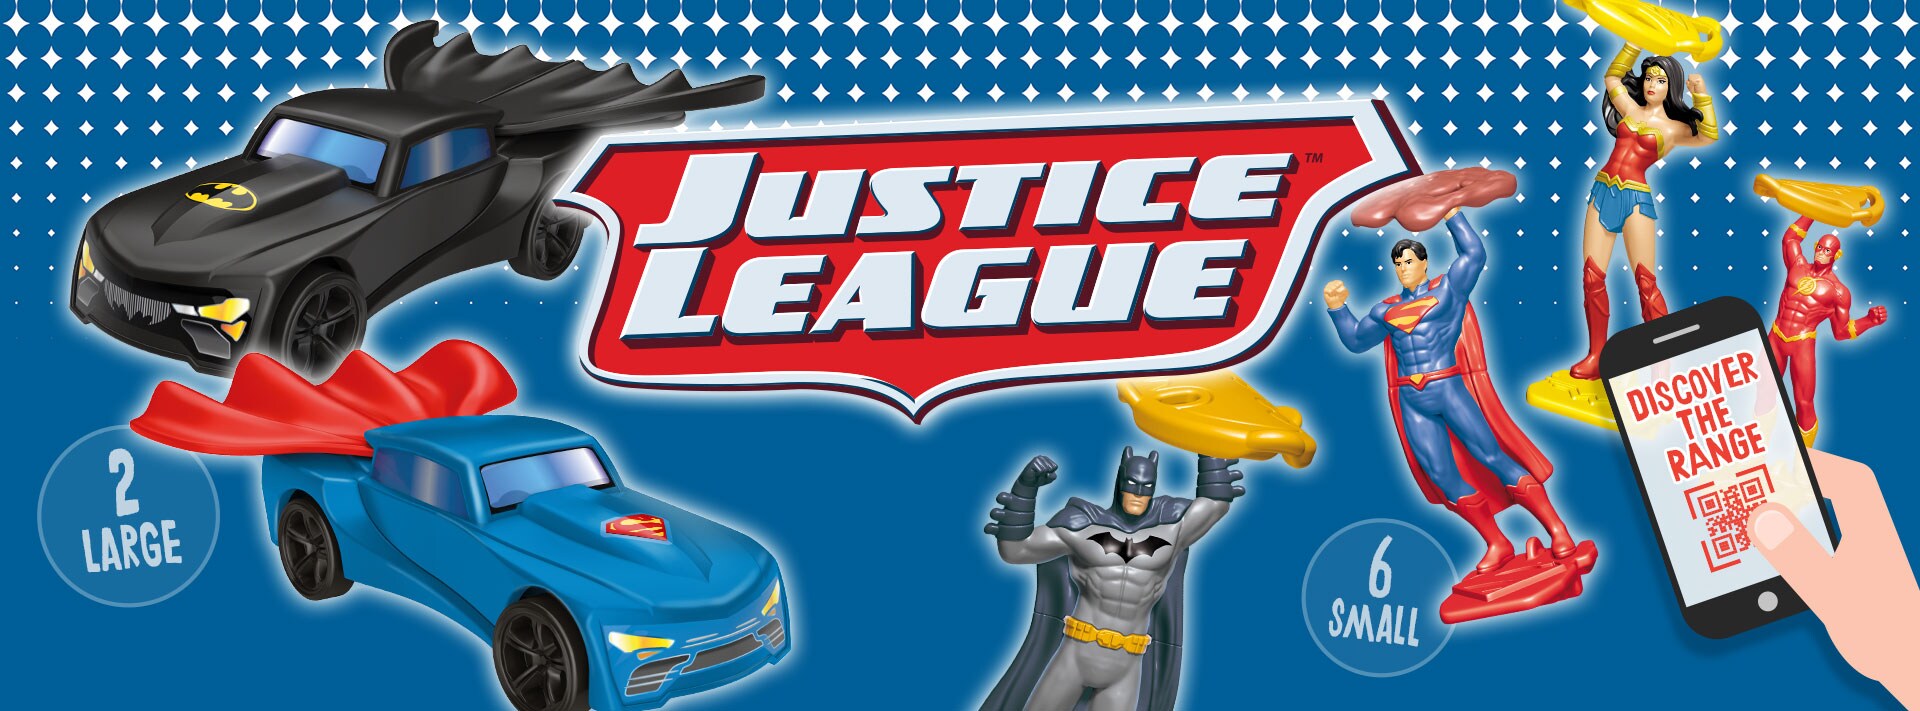 Kinder Batmobile Large Toy 2020 Easter Batman Car Chocolate Egg Justice League